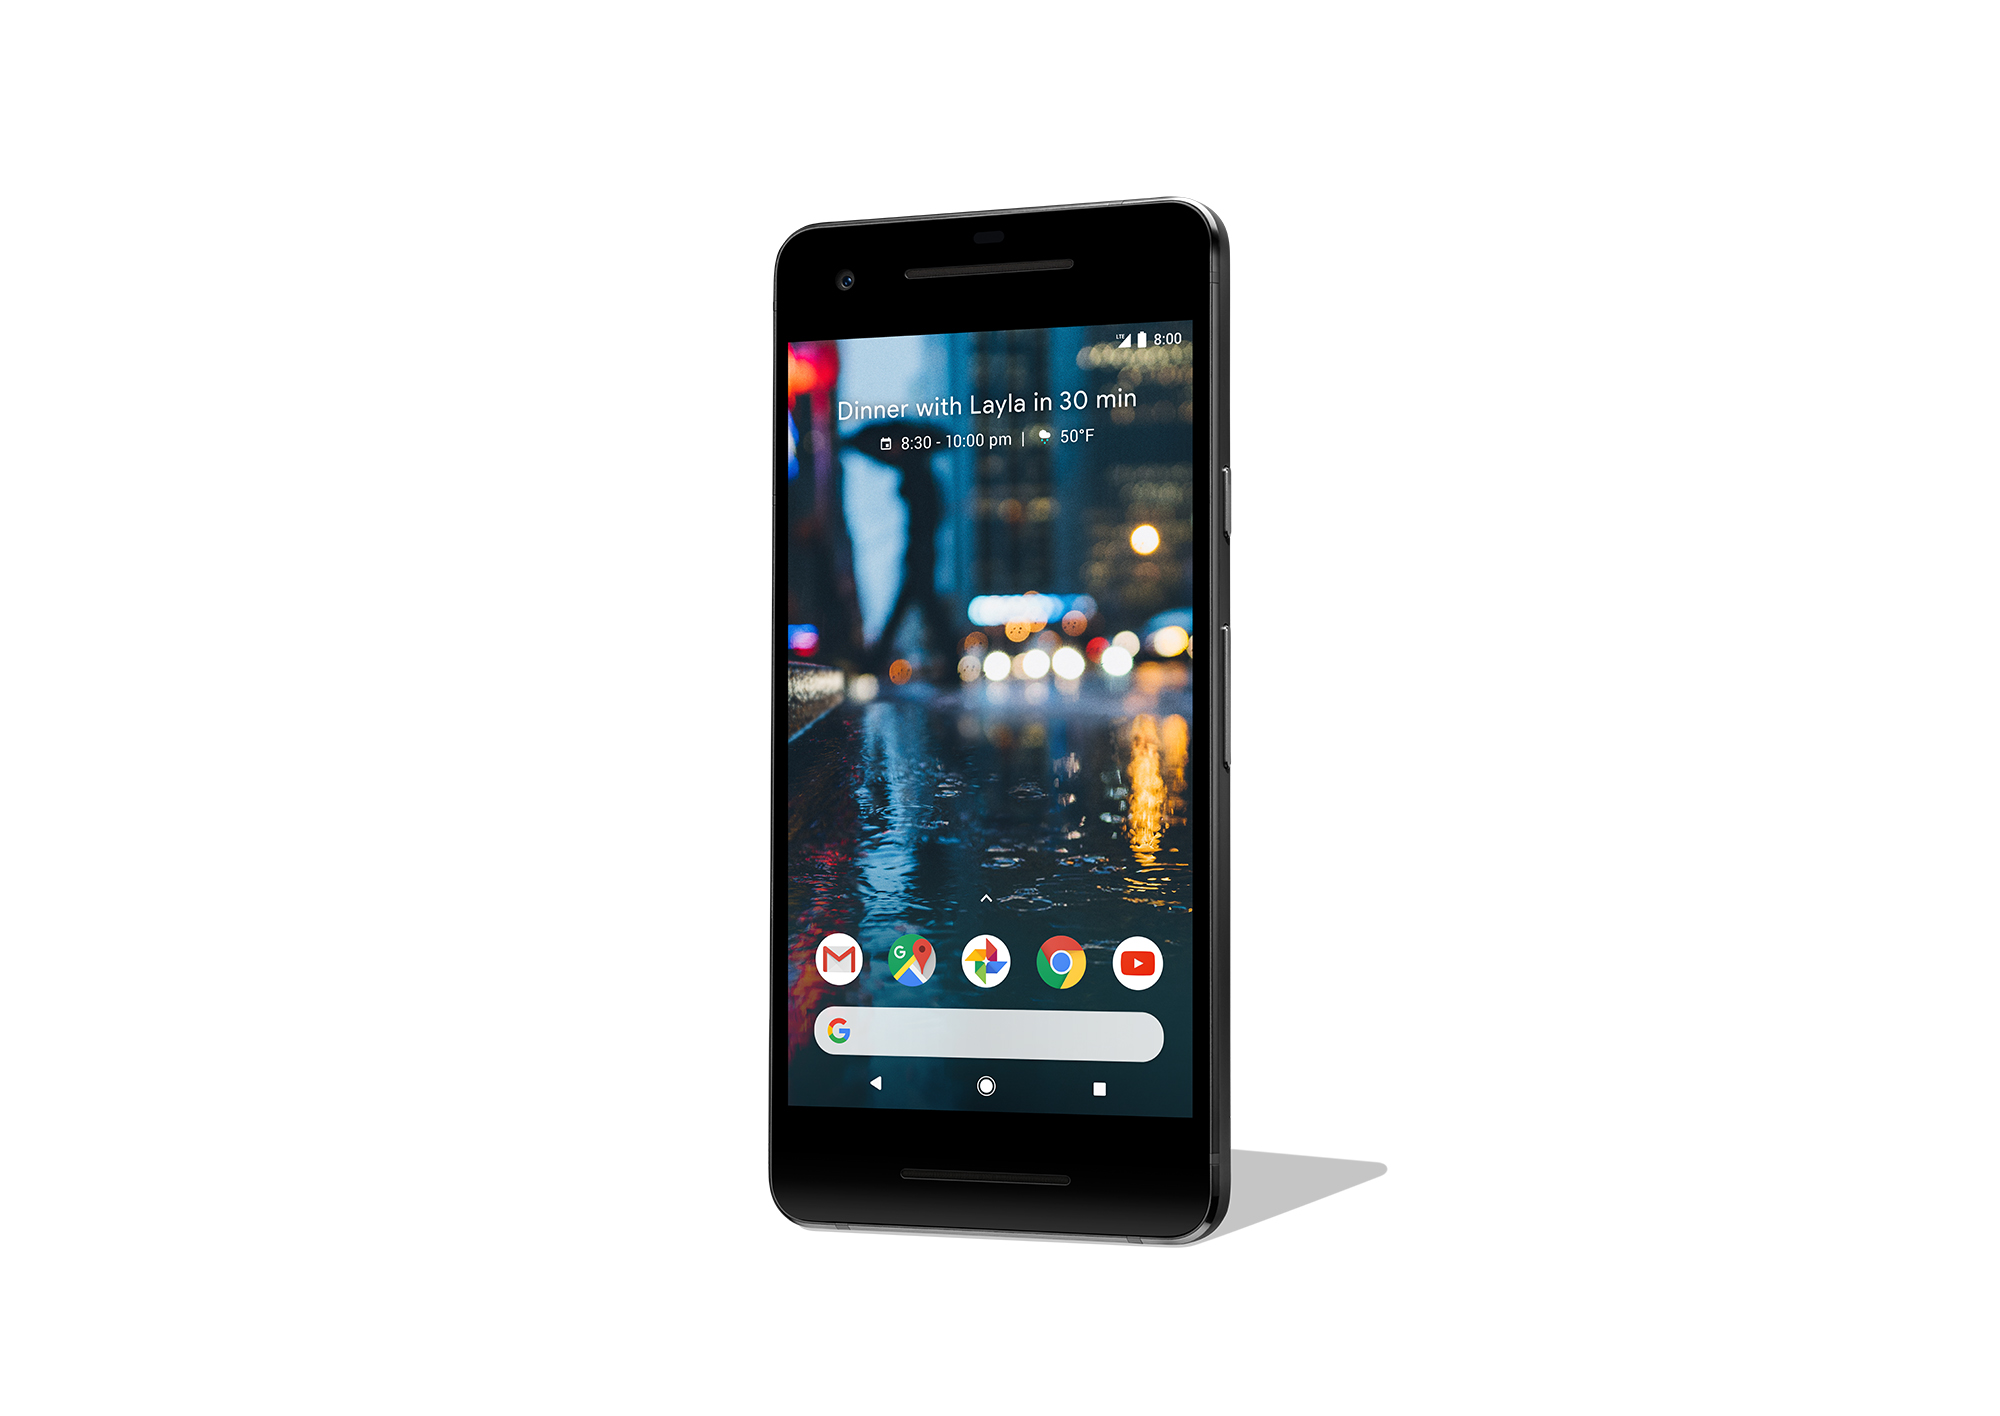 Google Pixel 2 64GB Verizon Smartphone, Black - image 2 of 7